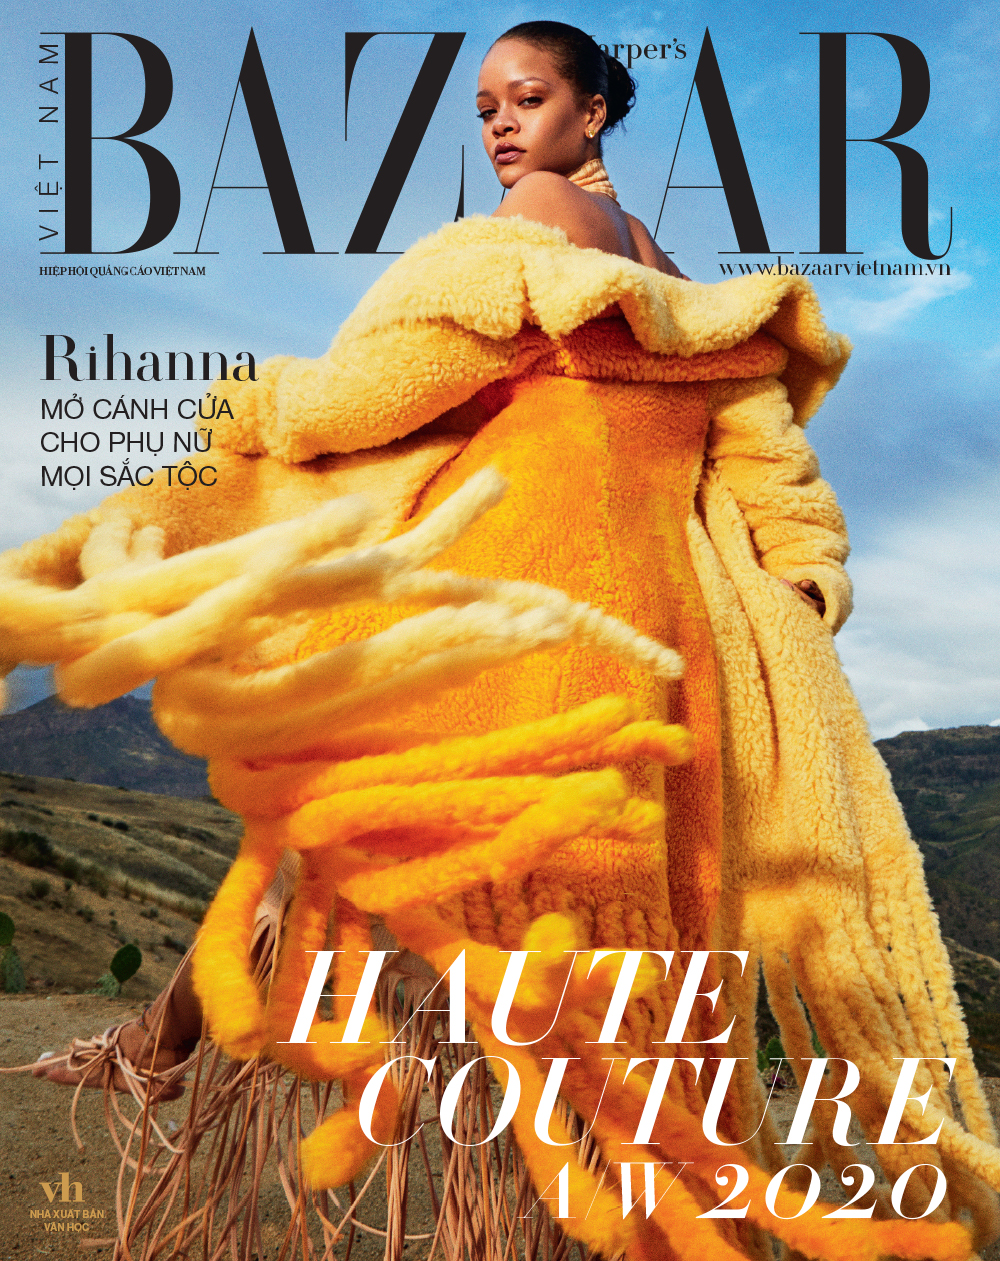 HBVN 9 20 Rihanna Cover